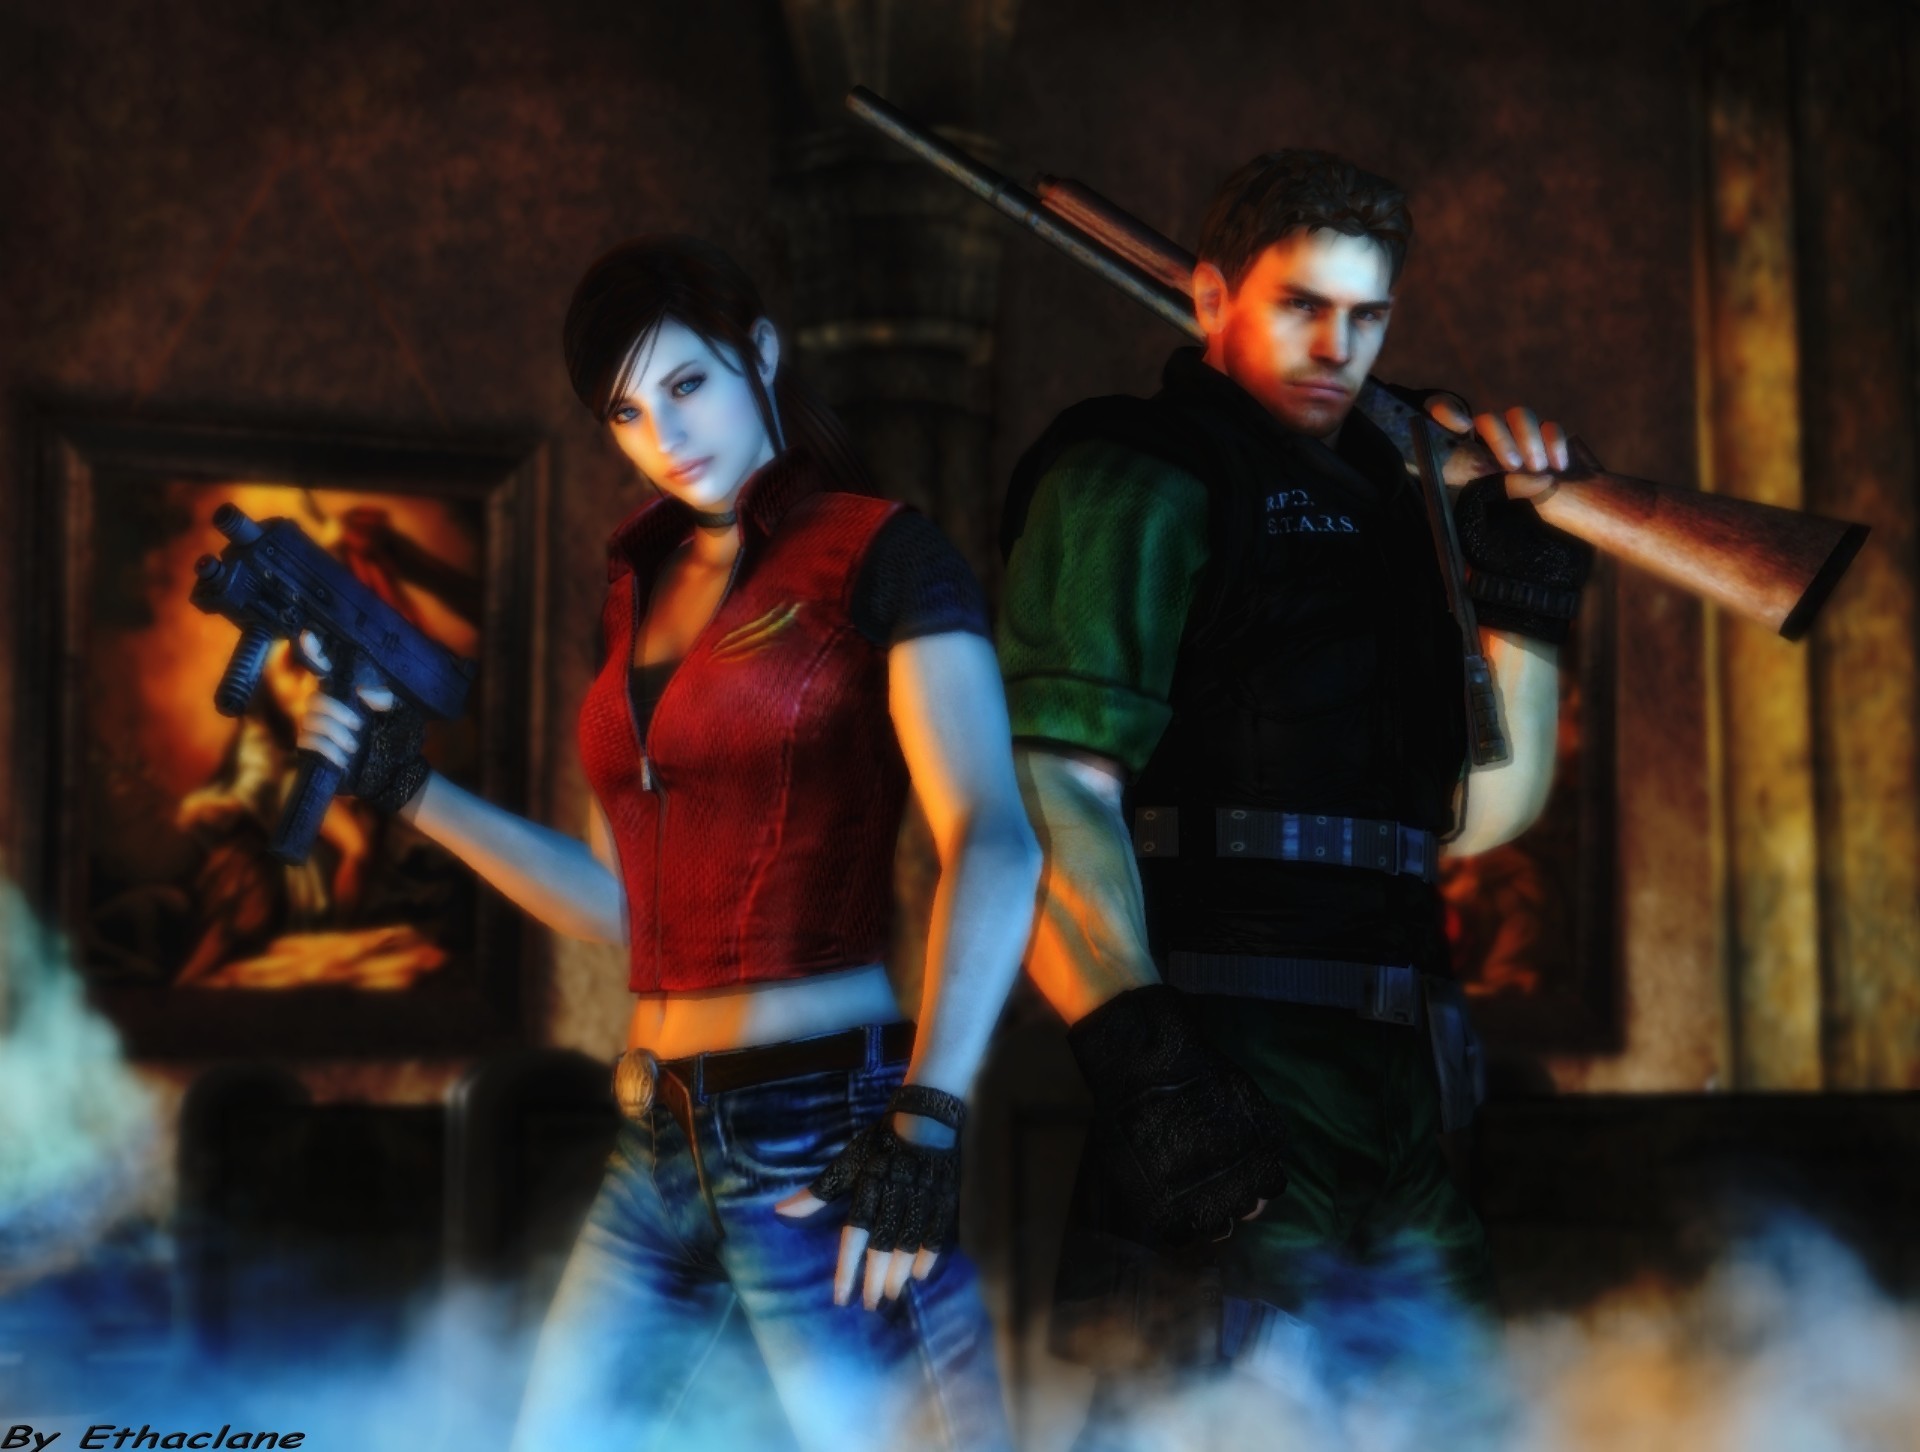 1920x1452 1920x1200 Chris Redfield and Sheva Alomar wallpaper from Resident Evil 5  Chris, Sheva and belongs to capcom Chris and Sheva Wallpaper 1